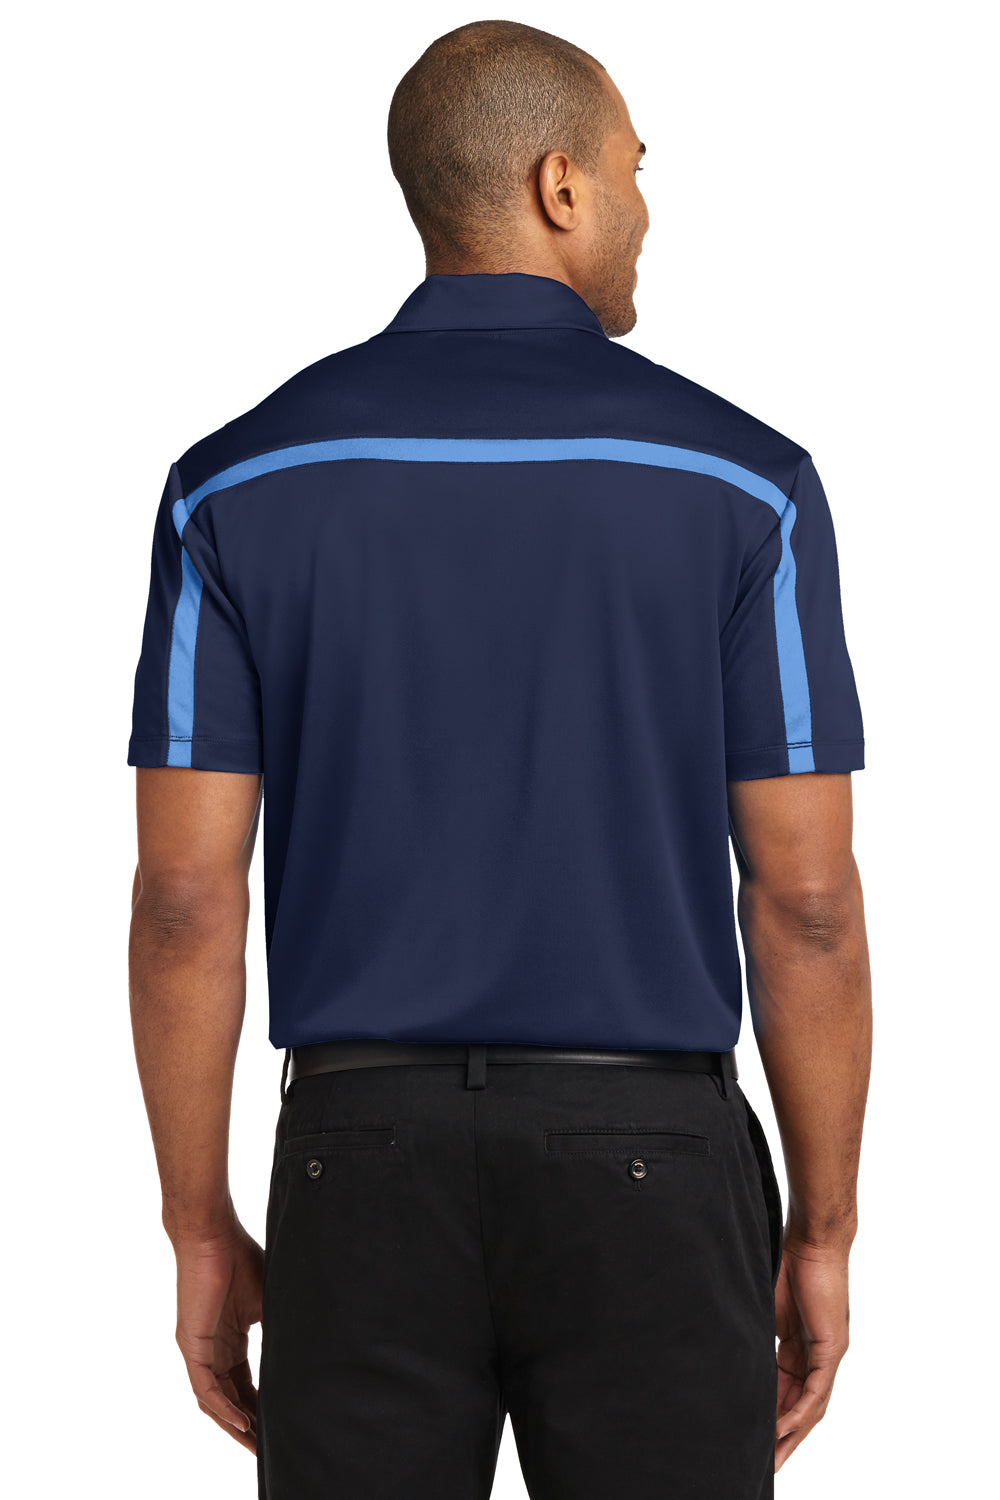 Port Authority K547 Mens Silk Touch Performance Moisture Wicking Short Sleeve Polo Shirt Navy Blue/Carolina Blue Back